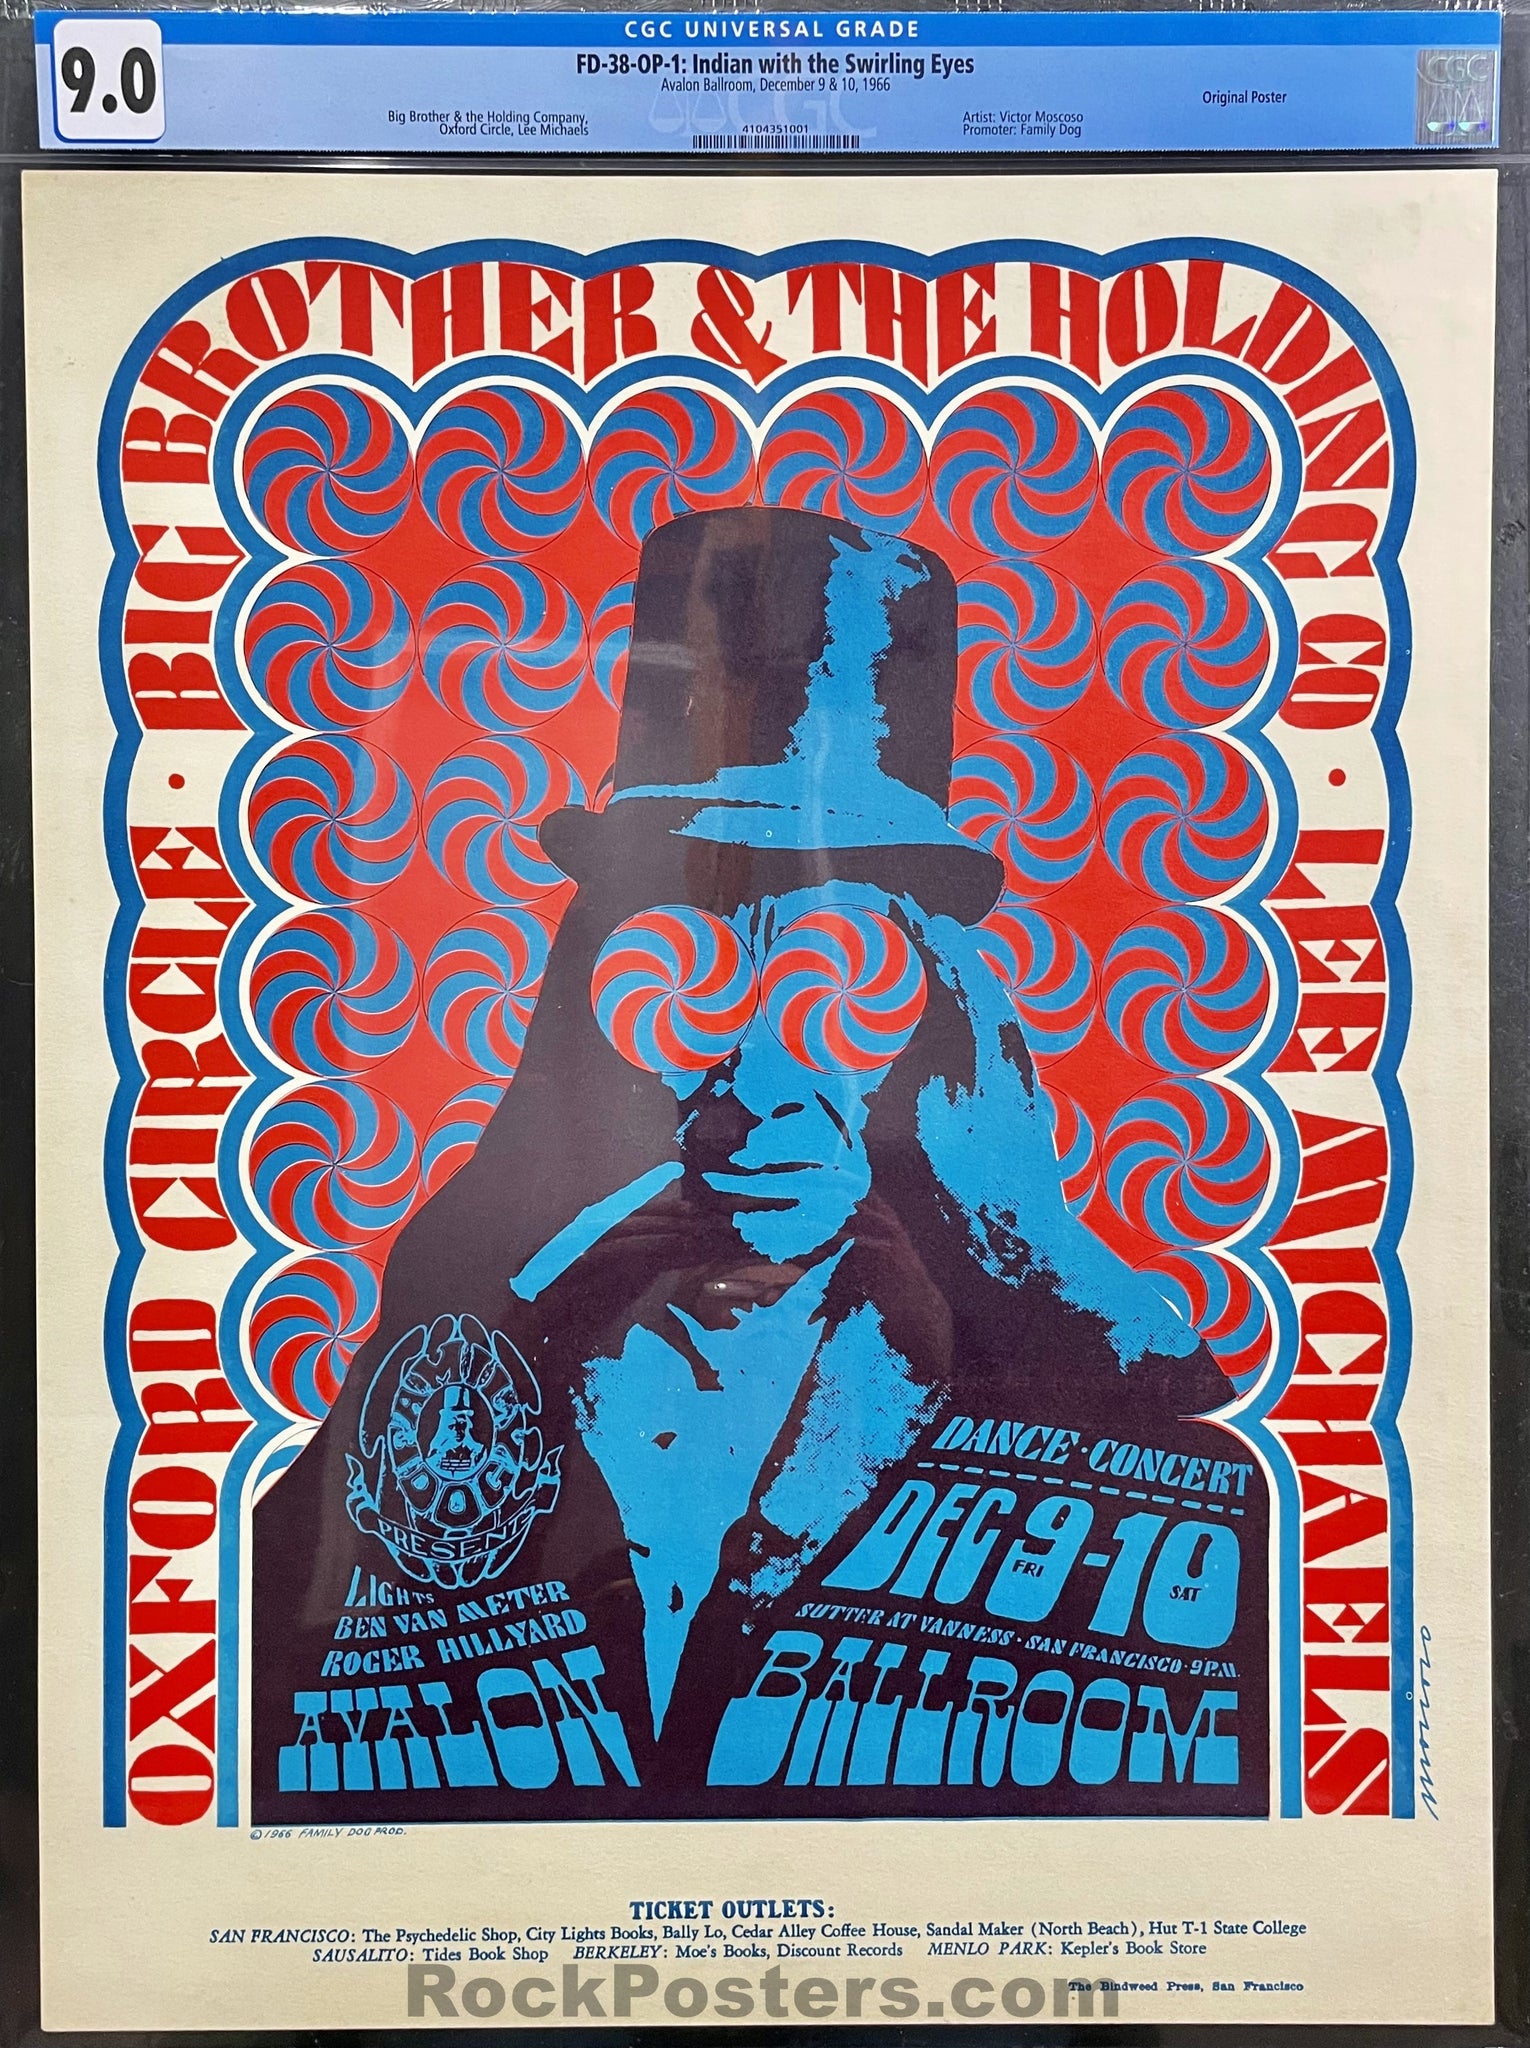 AUCTION - FD-38 - Big Brother Janis Joplin - 1966 Moscoso Poster - Avalon Ballroom - CGC Graded 9.0